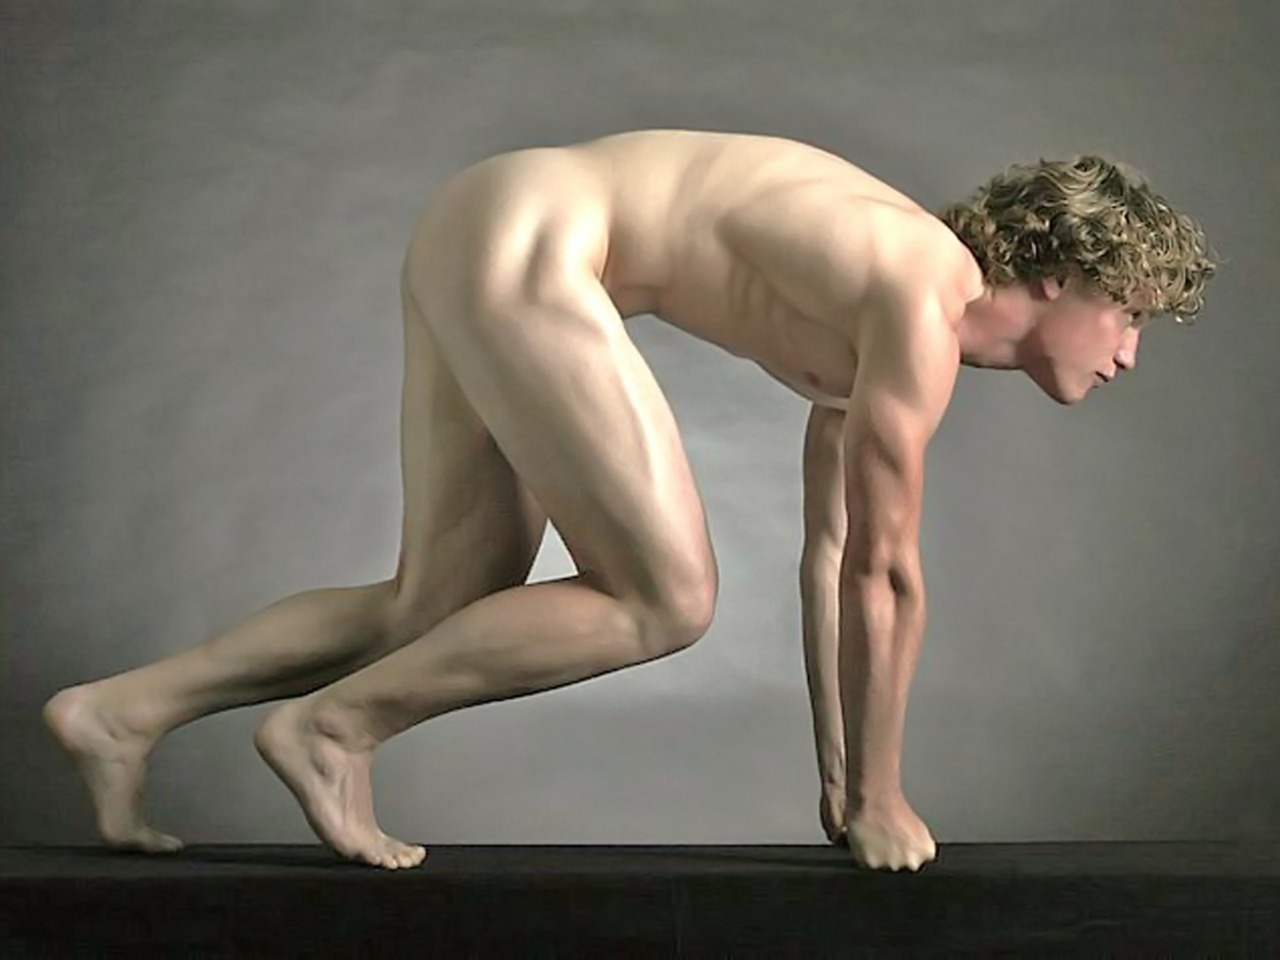 Naked male posing